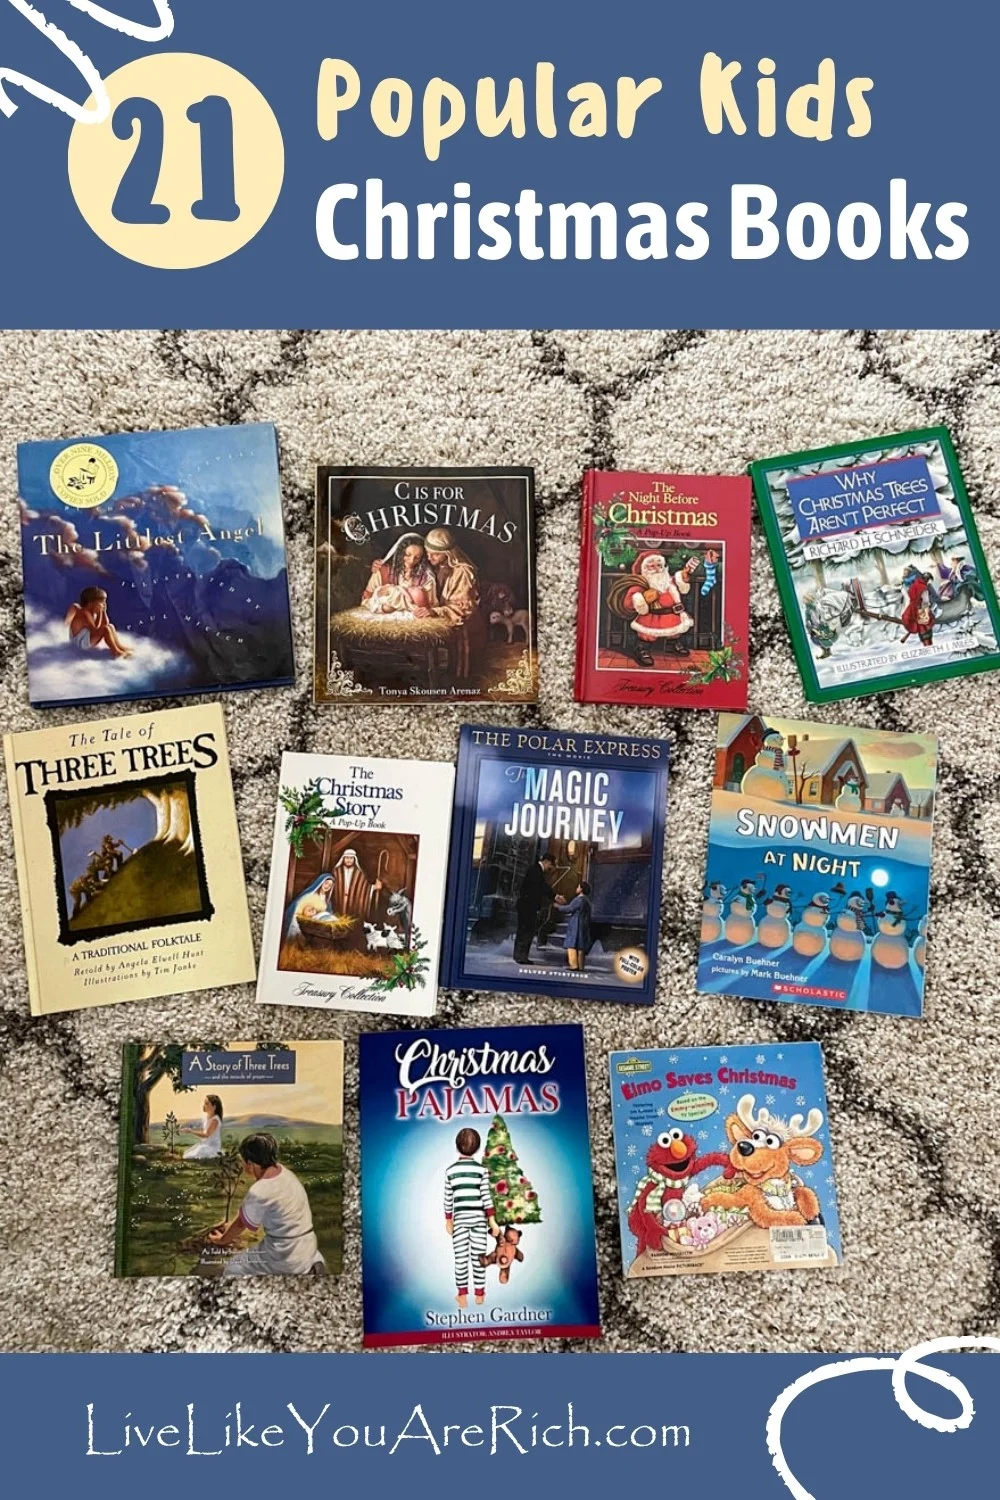 21 Popular Kids Christmas Books